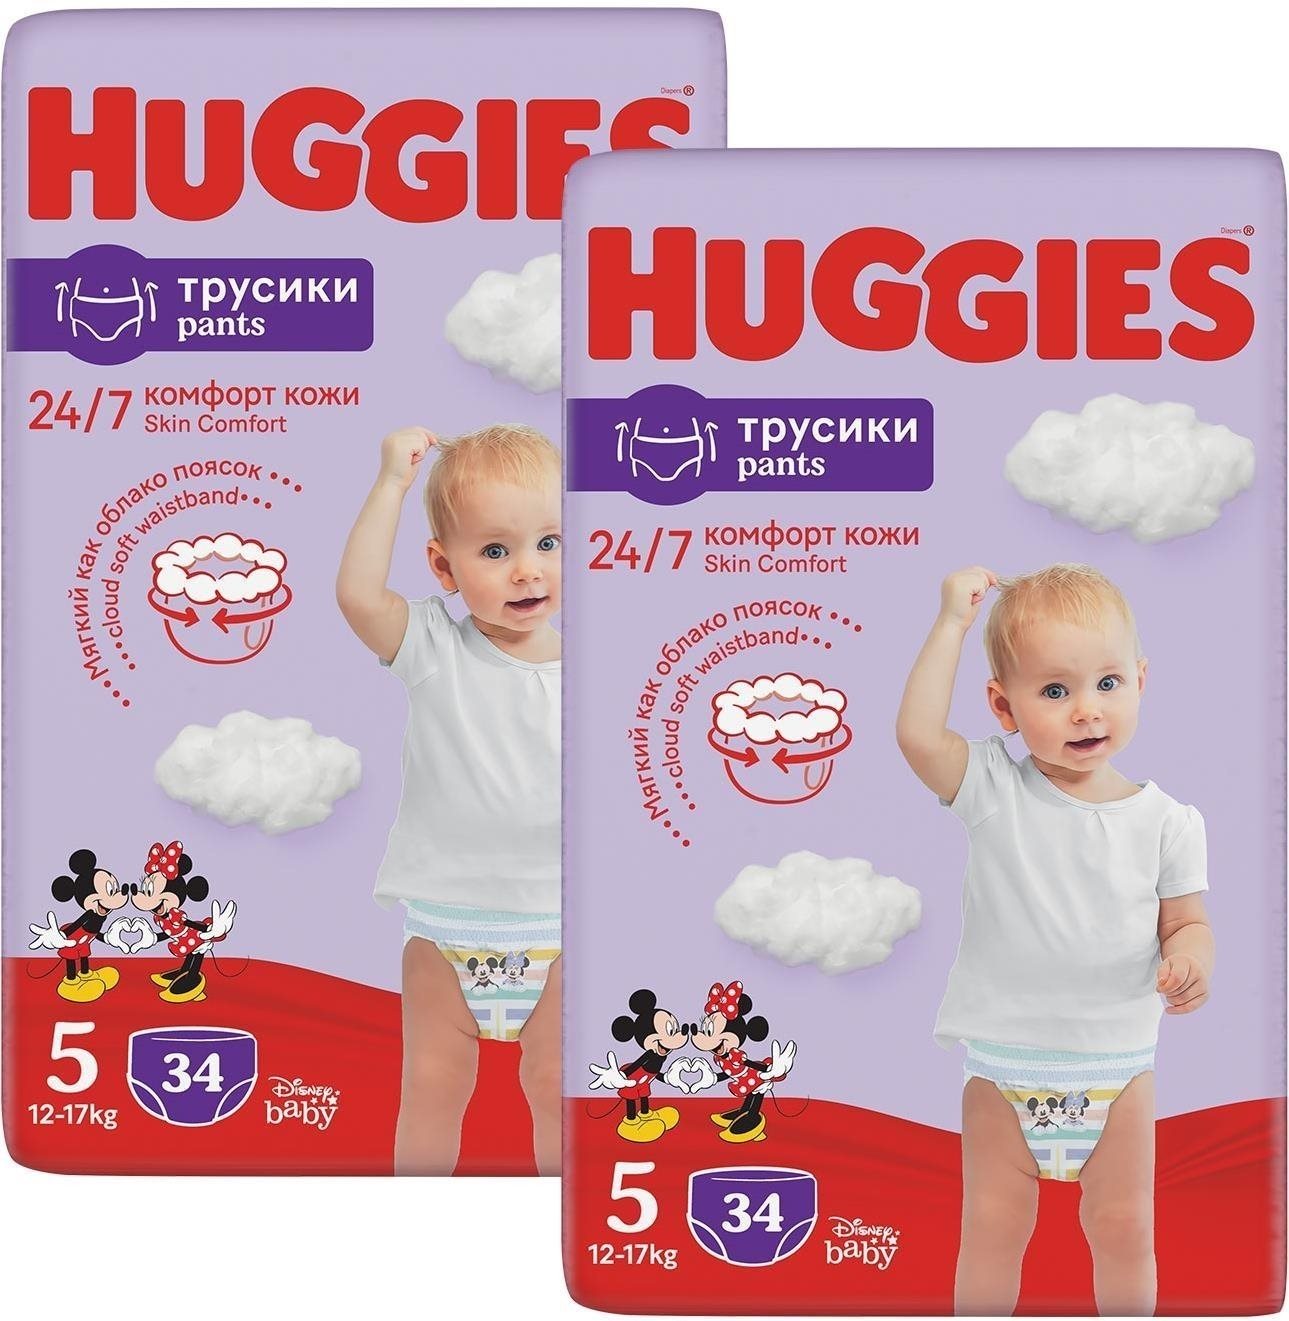 Bugyipelenka HUGGIES Pants méret 5 (68 db)